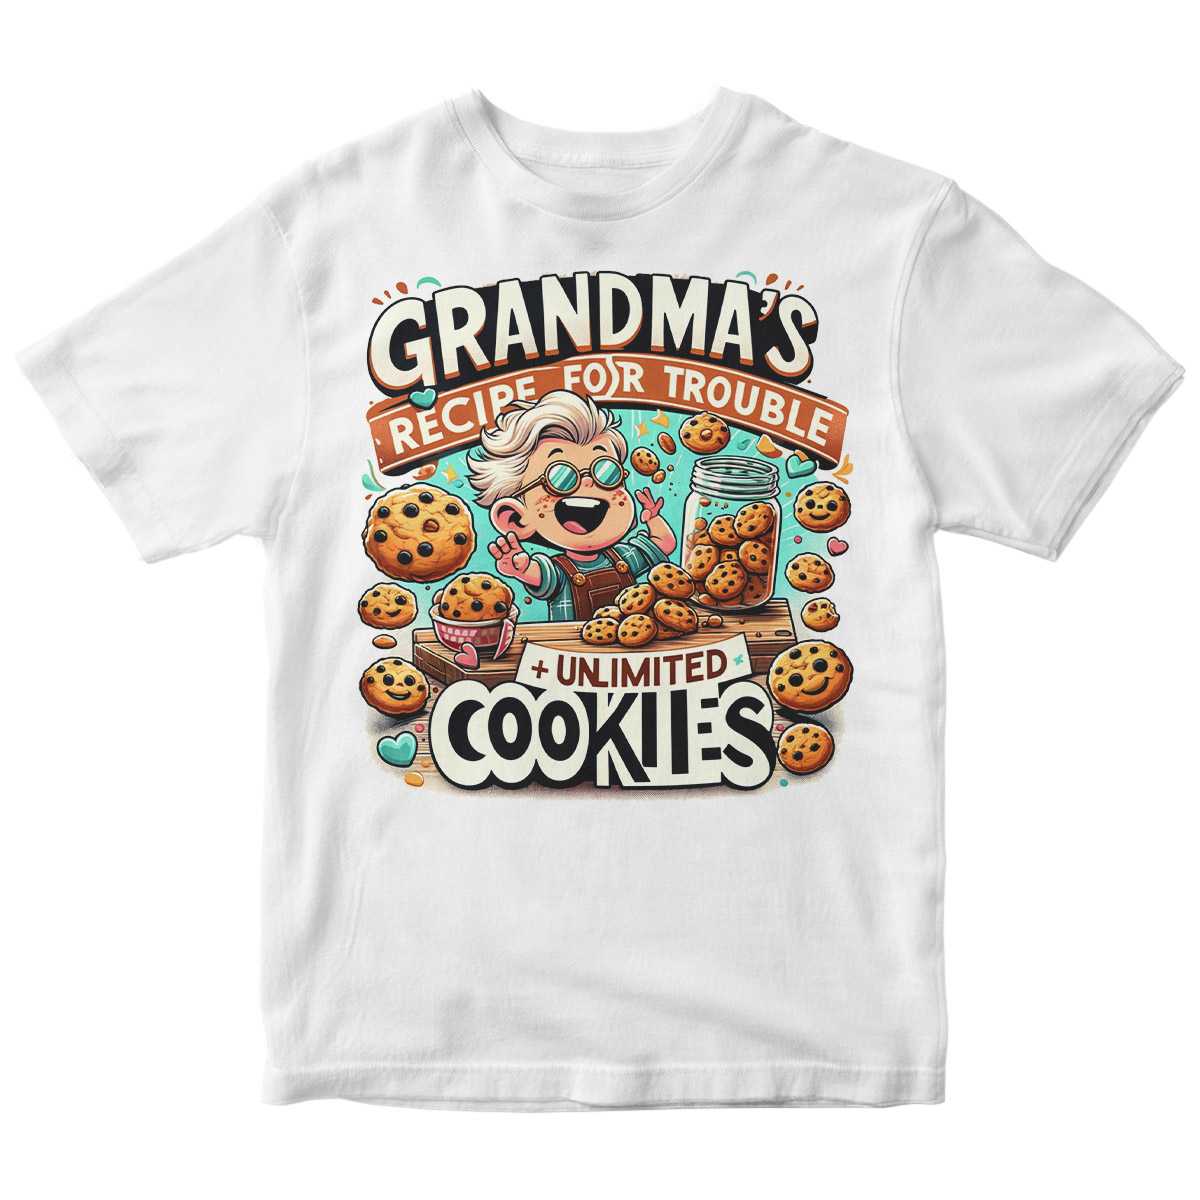 Grandmas Recipe For Trouble